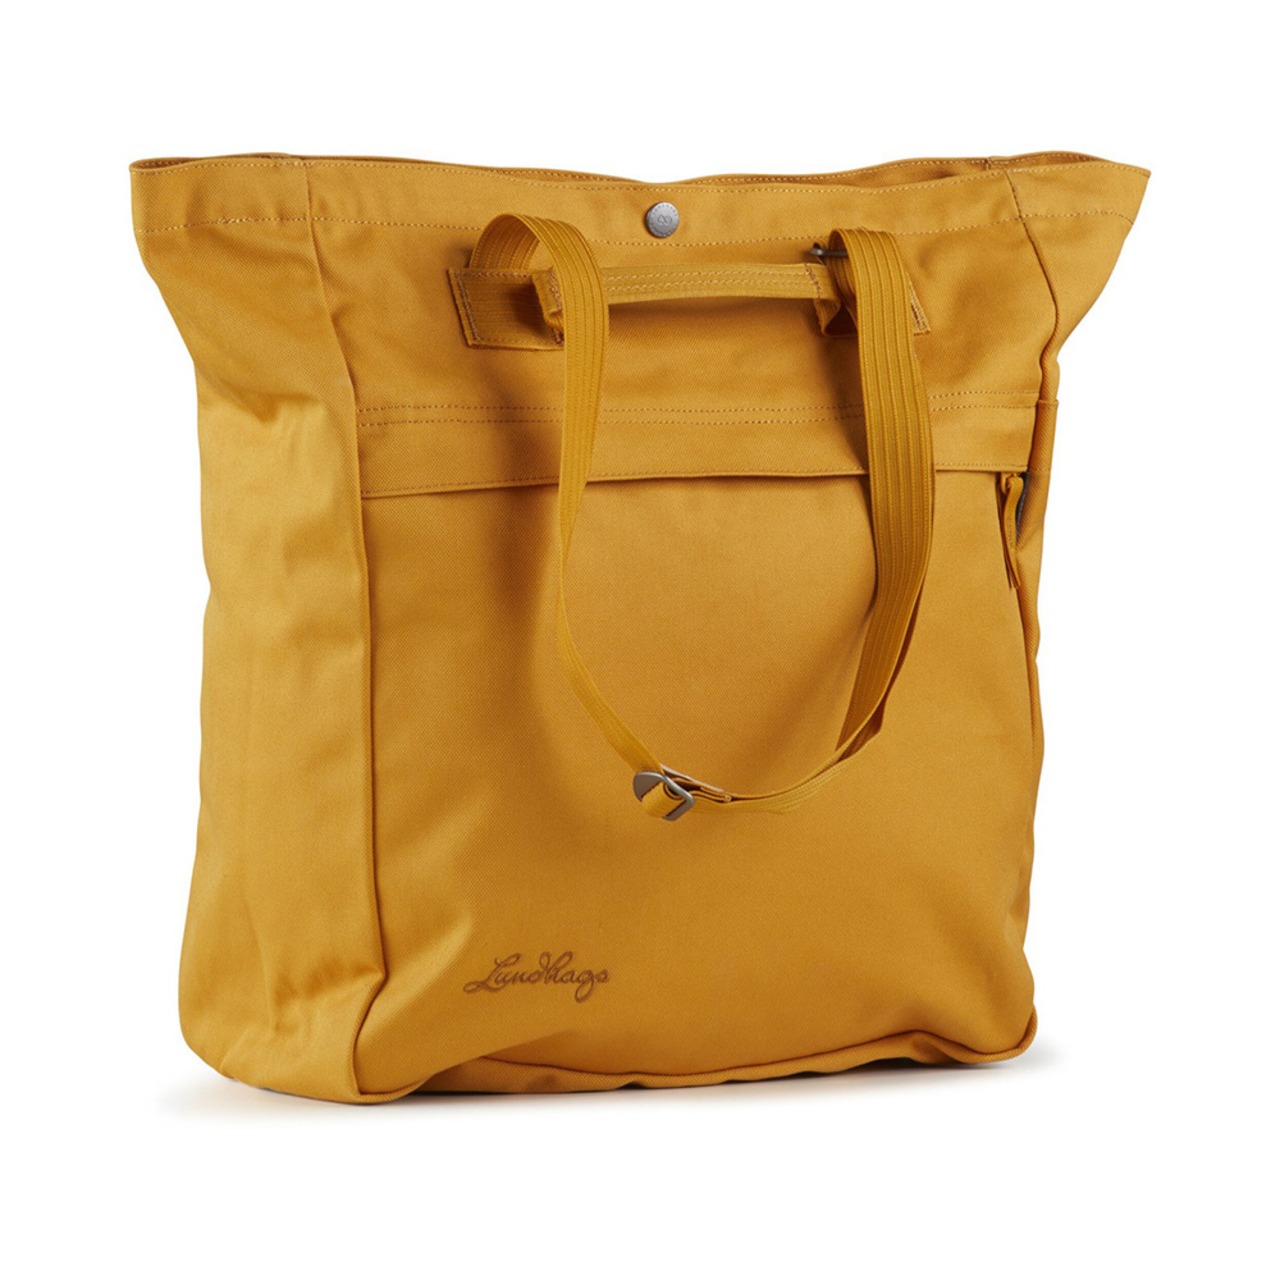 Lundhags 北欧生まれの 高機能 防水 バックパック ショルダーバッグ ハンドバッグ Ymse 24 リュック デイパック 24L 丈夫で軽量 リサイクル素材 バッグ